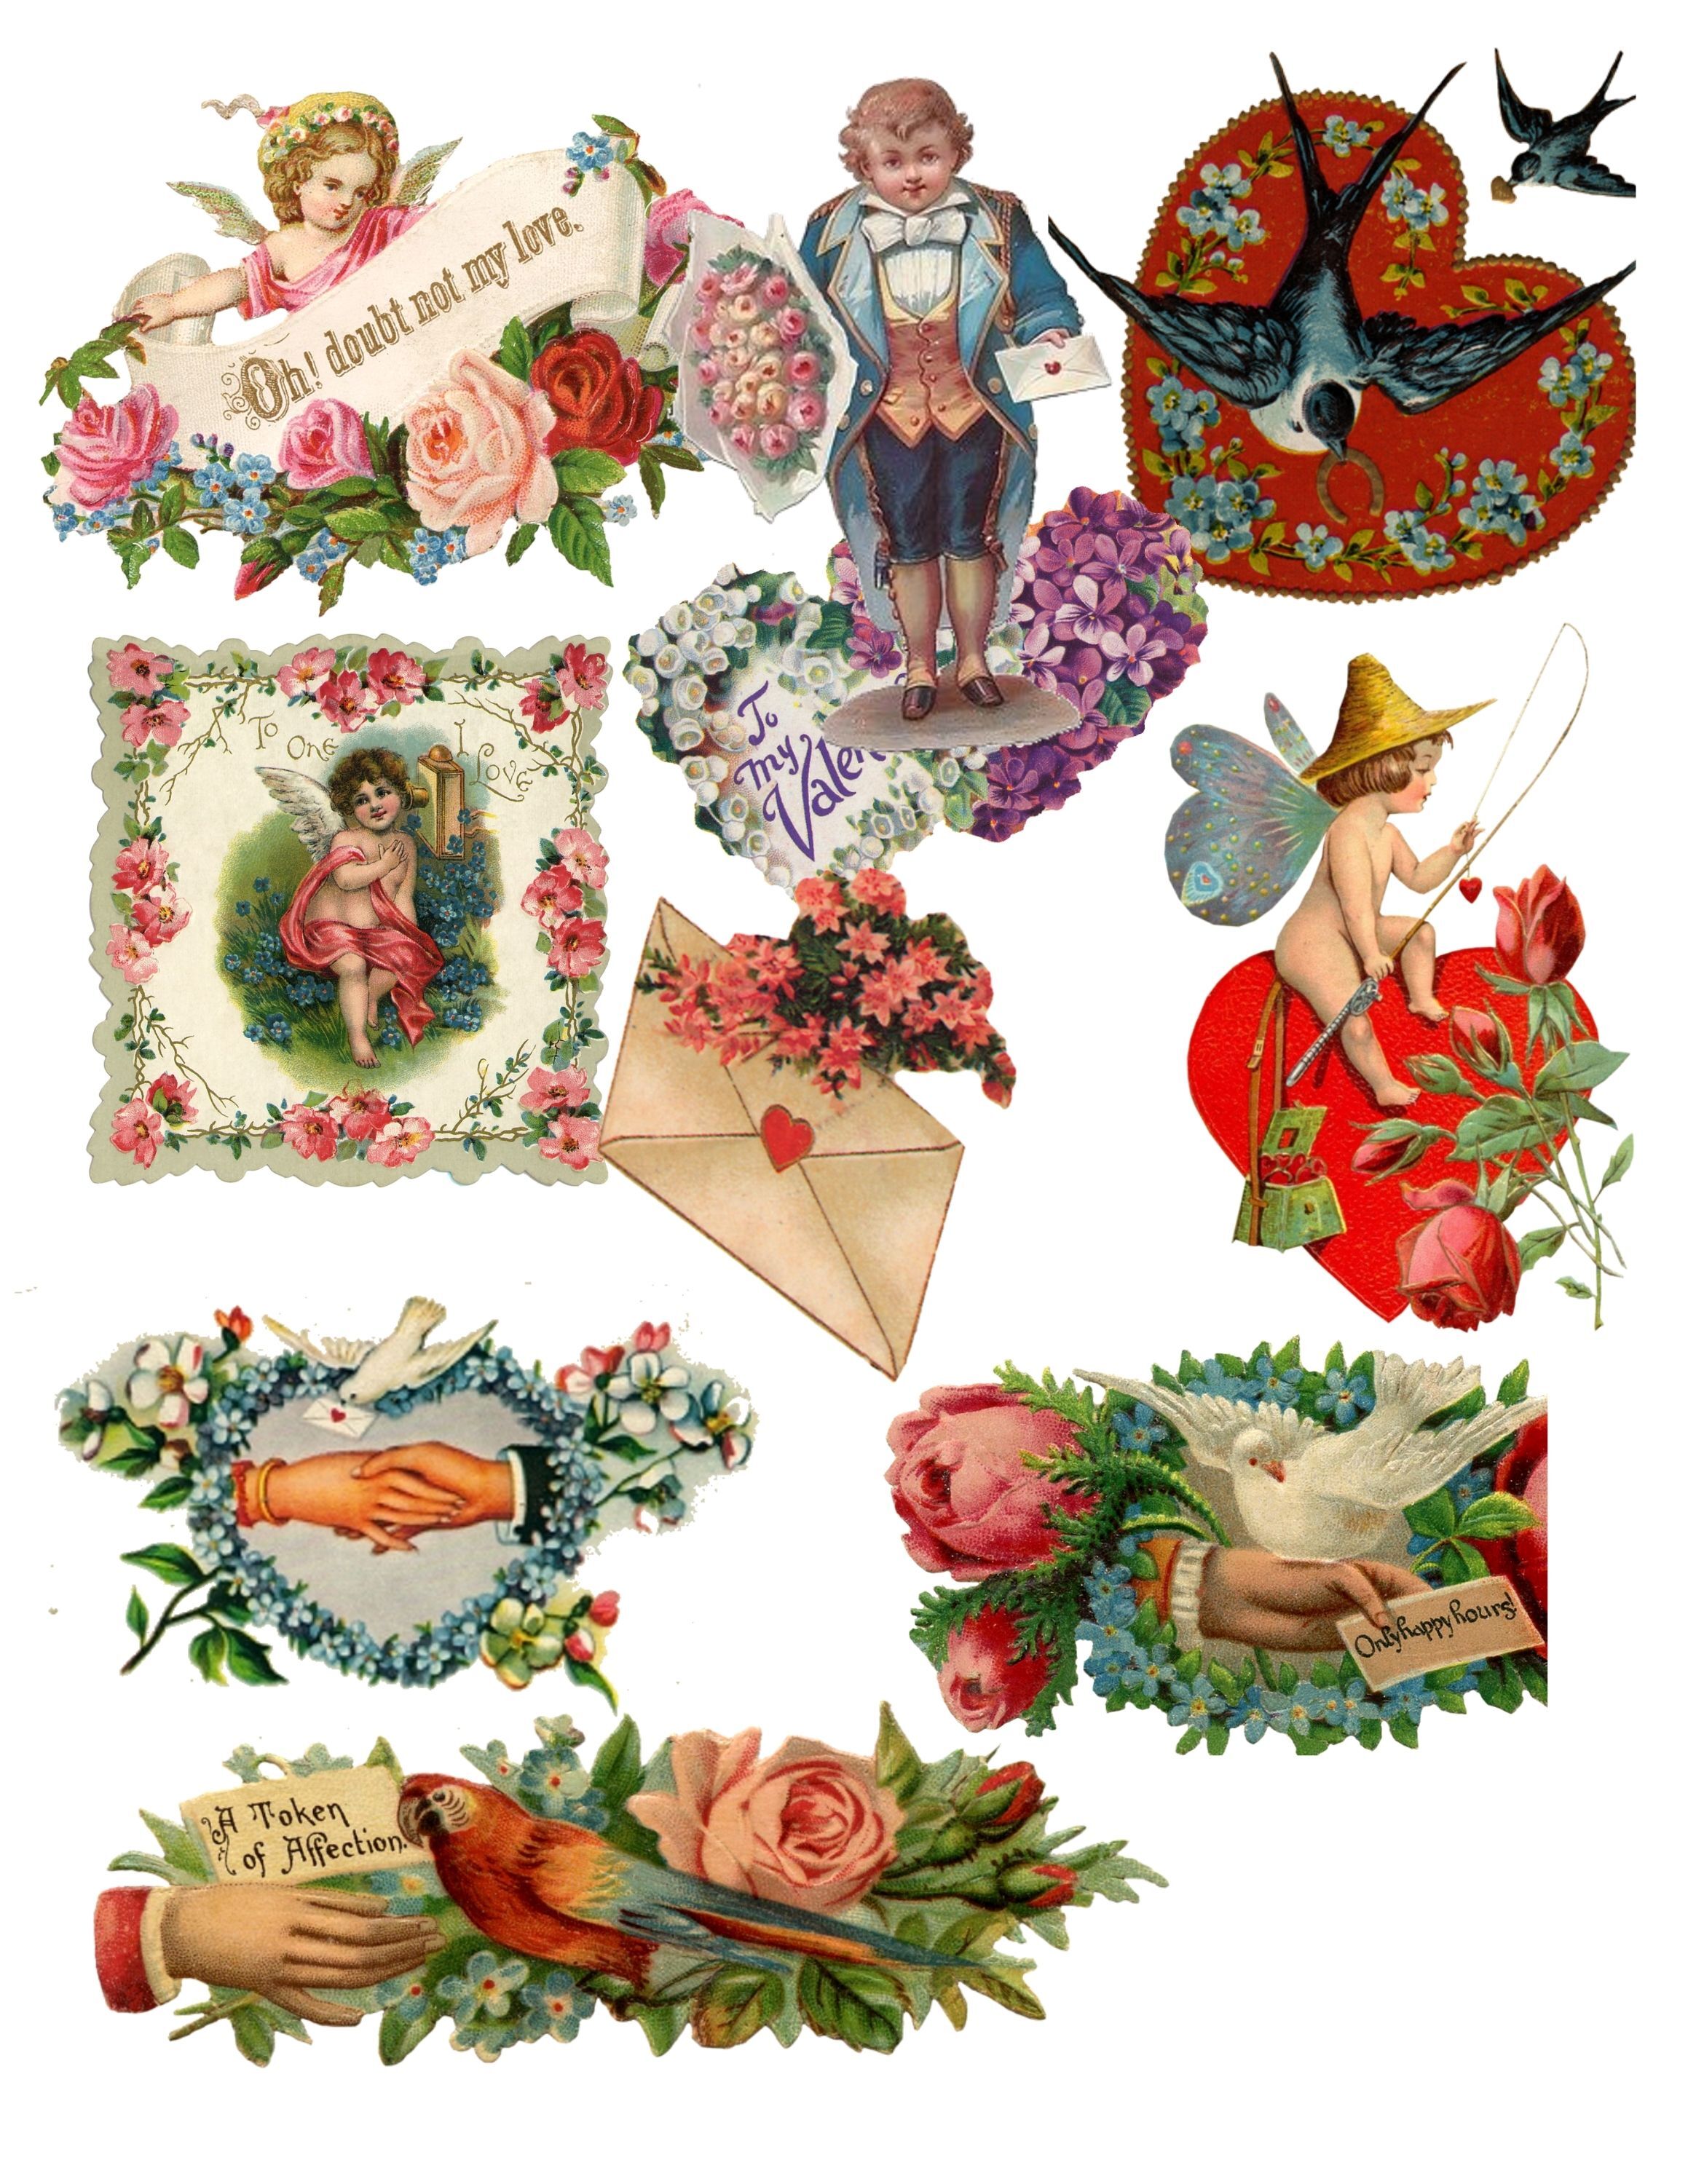 Authentic Vintage Valentines Cards Graphic by Digital Attic Studio